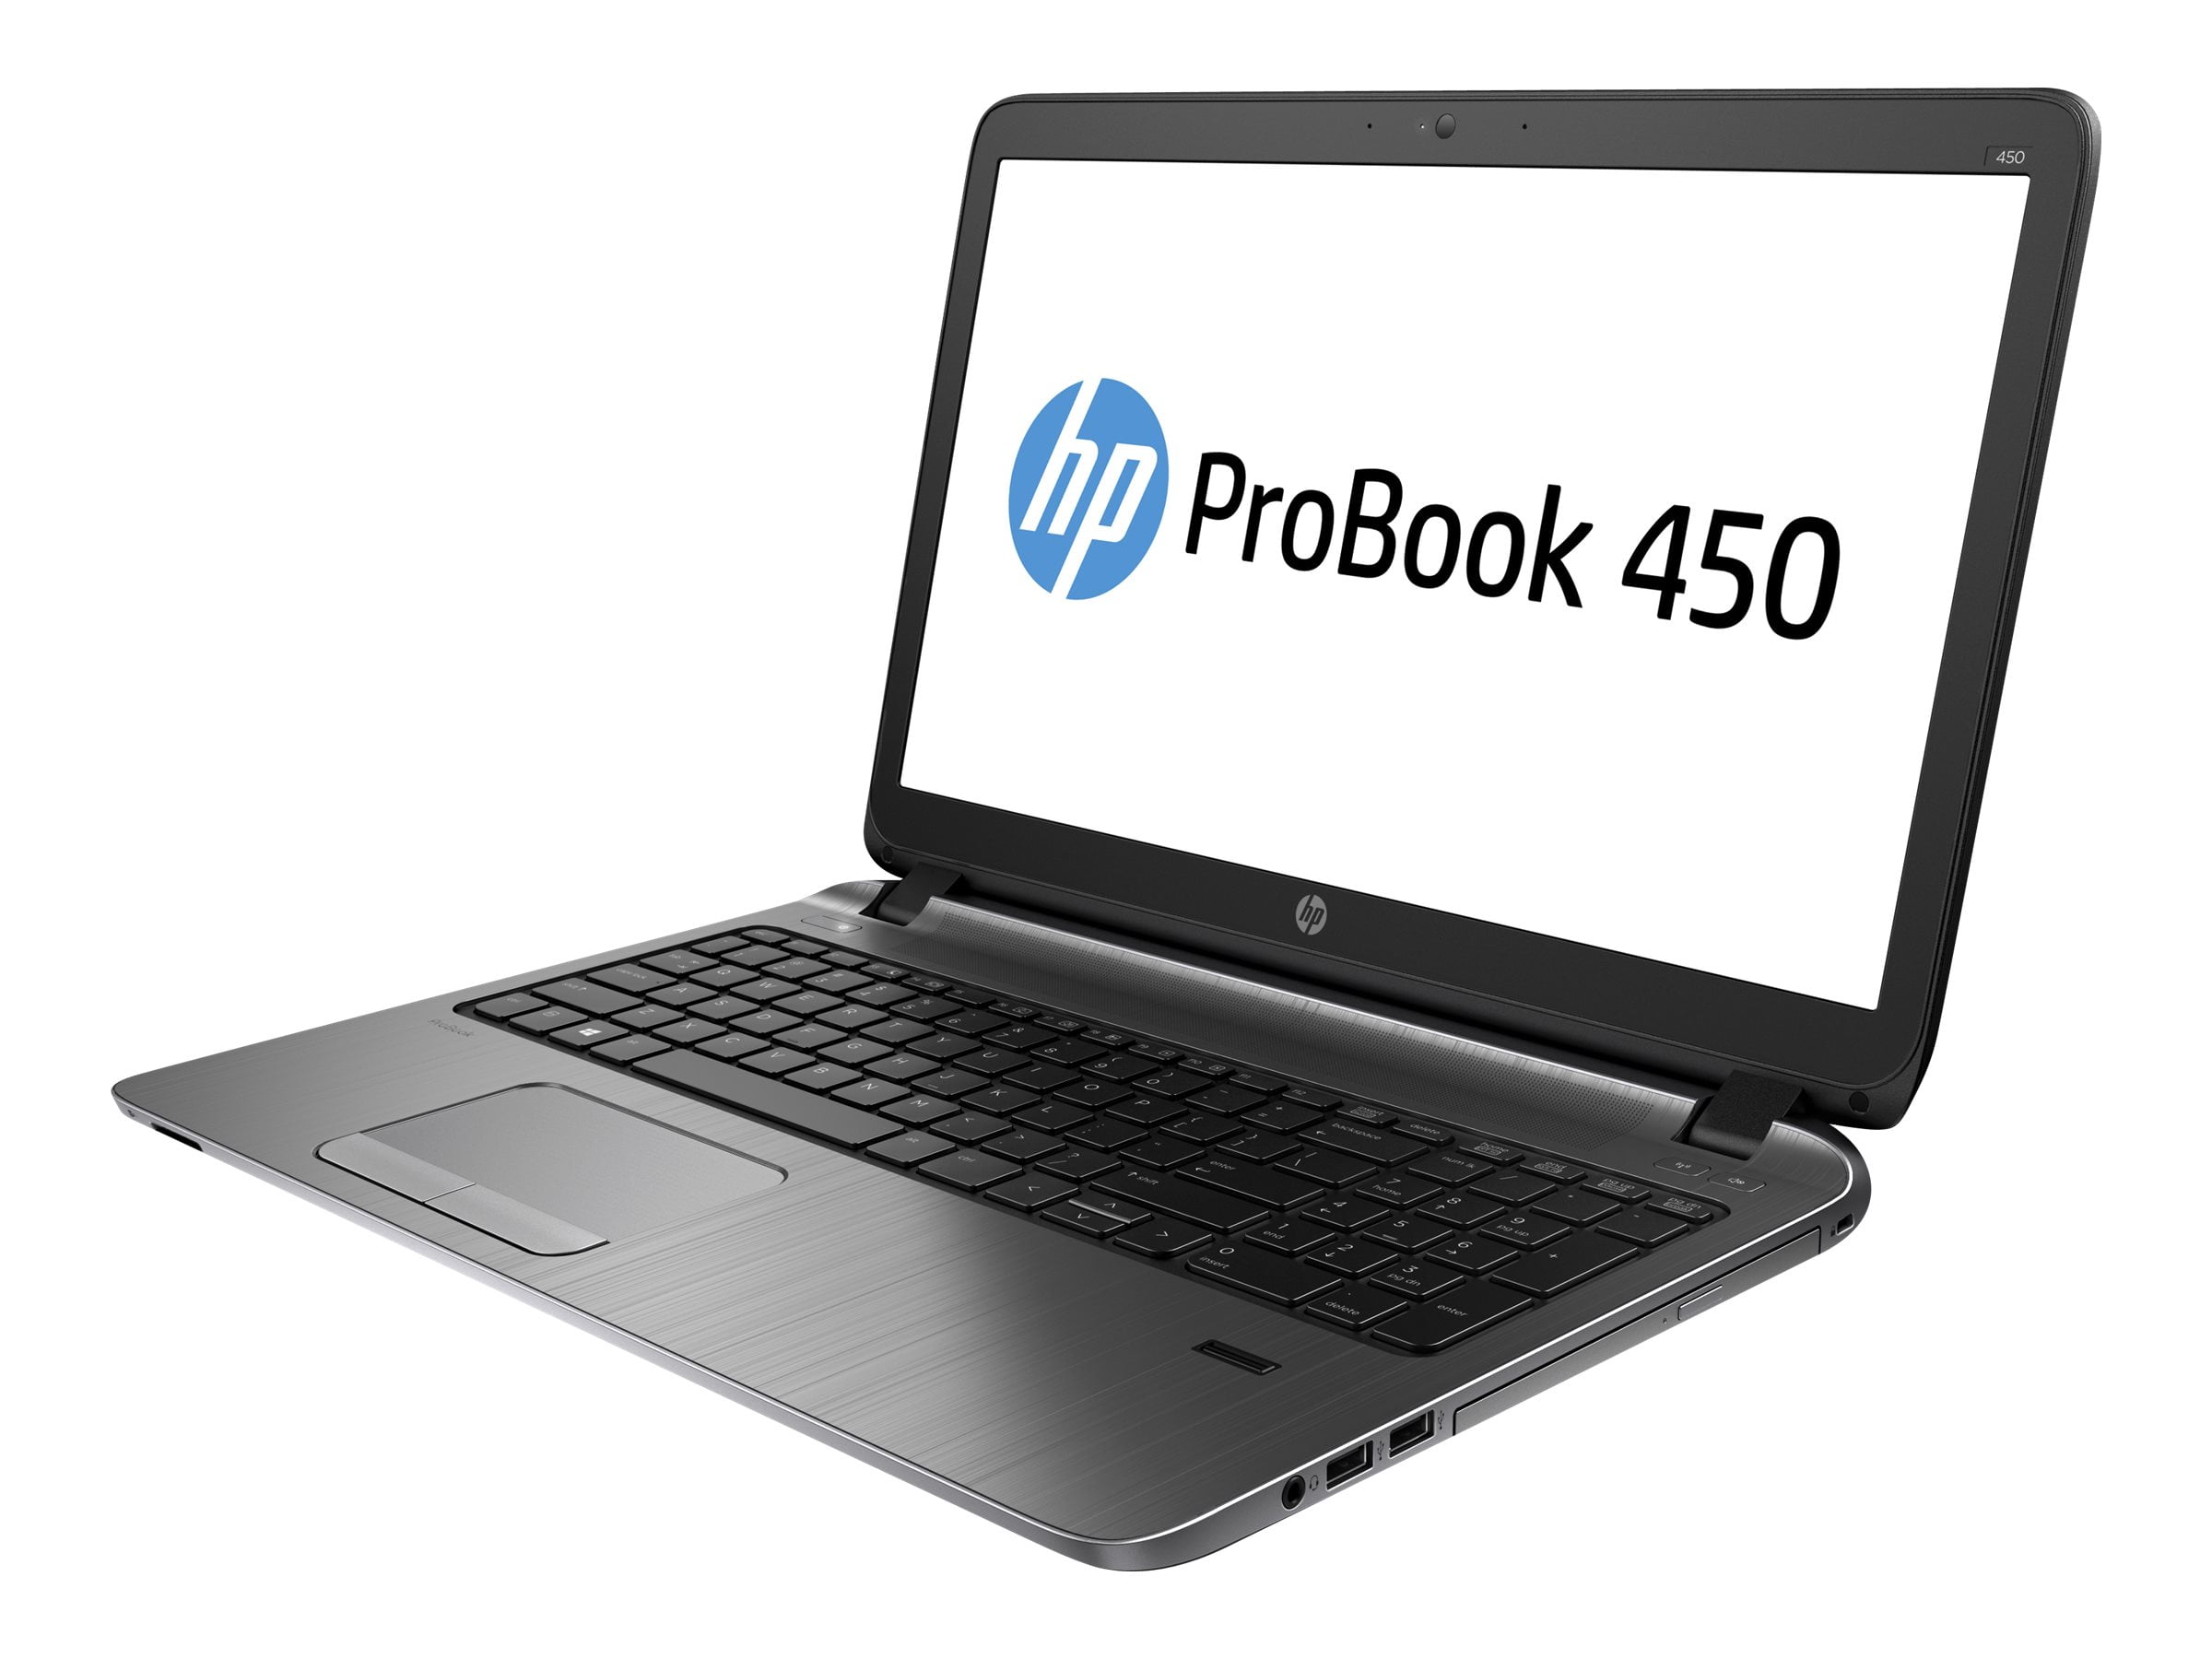 HP ProBook 450 G2 - Core i3 5005U / 2 GHz - (includes Win 10 Pro 64-bit  License) - 4 GB RAM - 500 GB HDD - DVD SuperMulti - 15.6